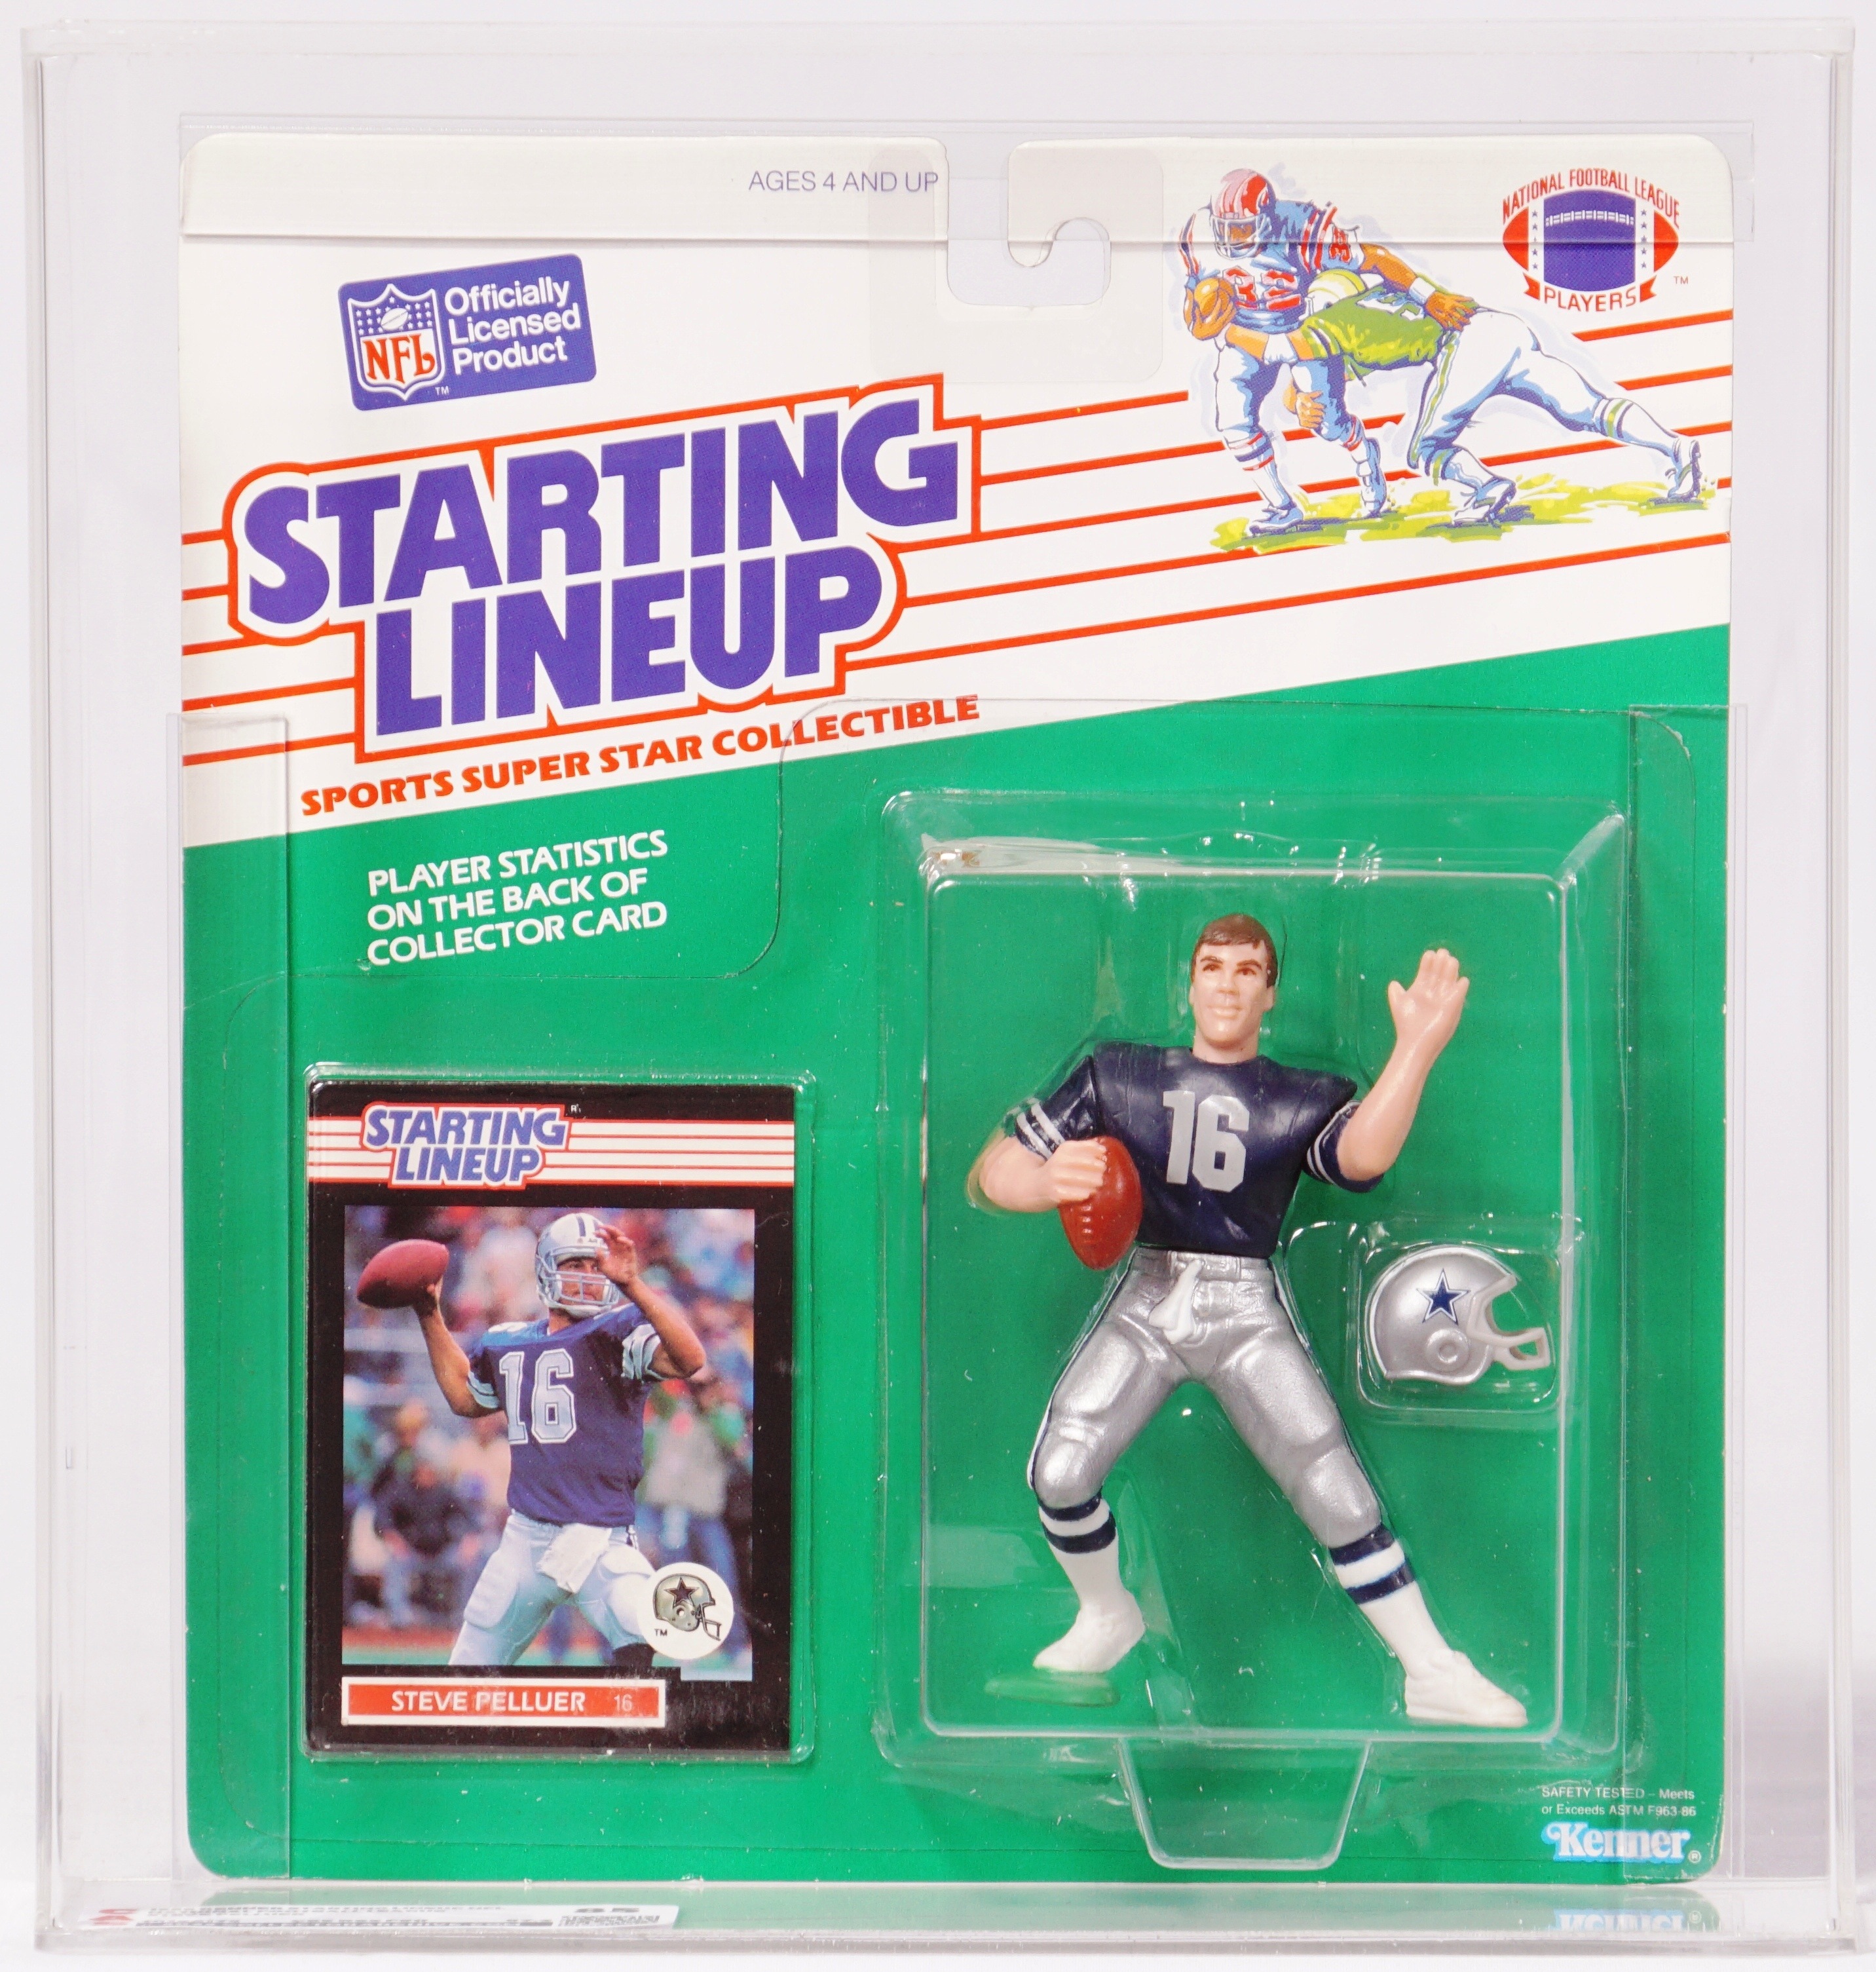 1989 Kenner Starting Lineup NFL Carded Sports Figure - Steve Pelluer